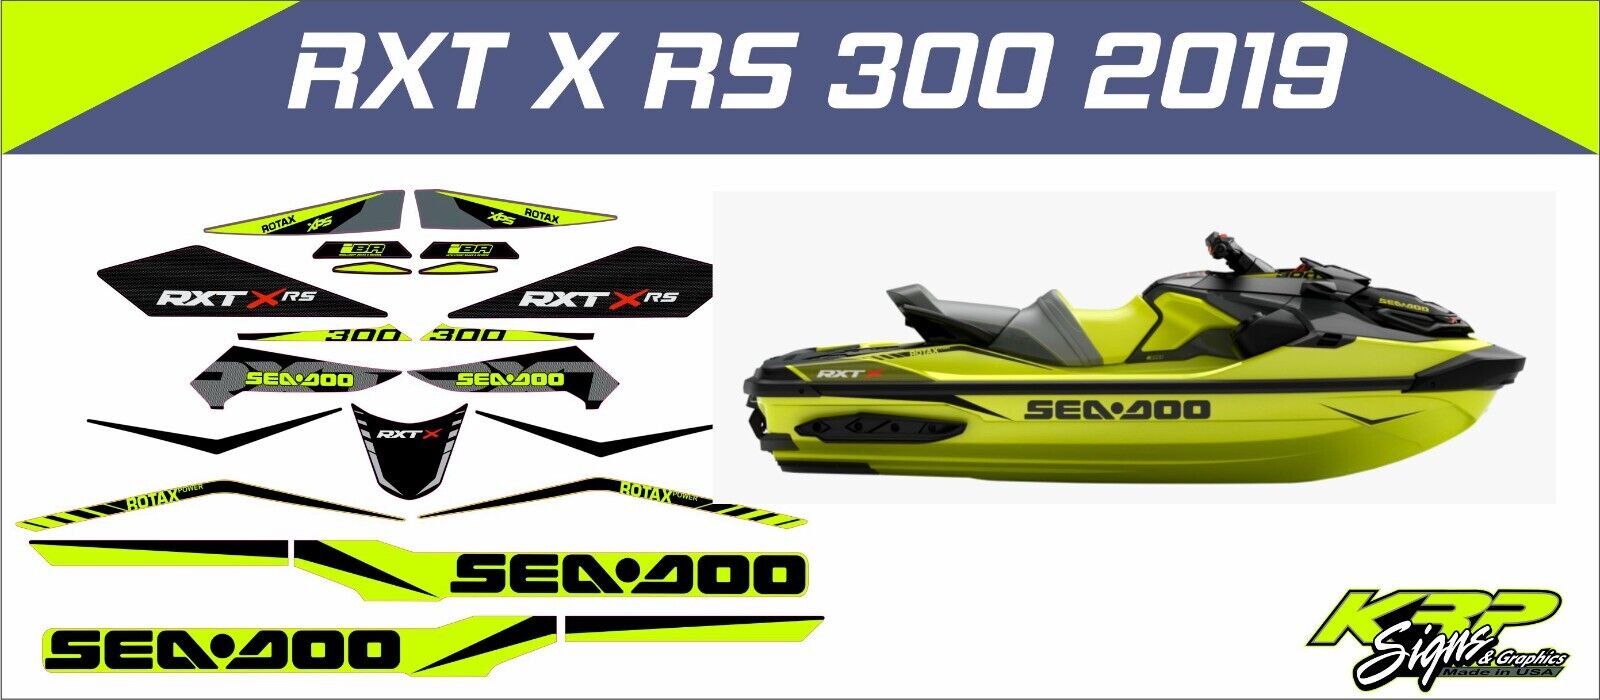 SEADOO RXT X RS 300 2019 Graphics / Decal / Sticker Kit YELLOW & BLACK CUSTOM